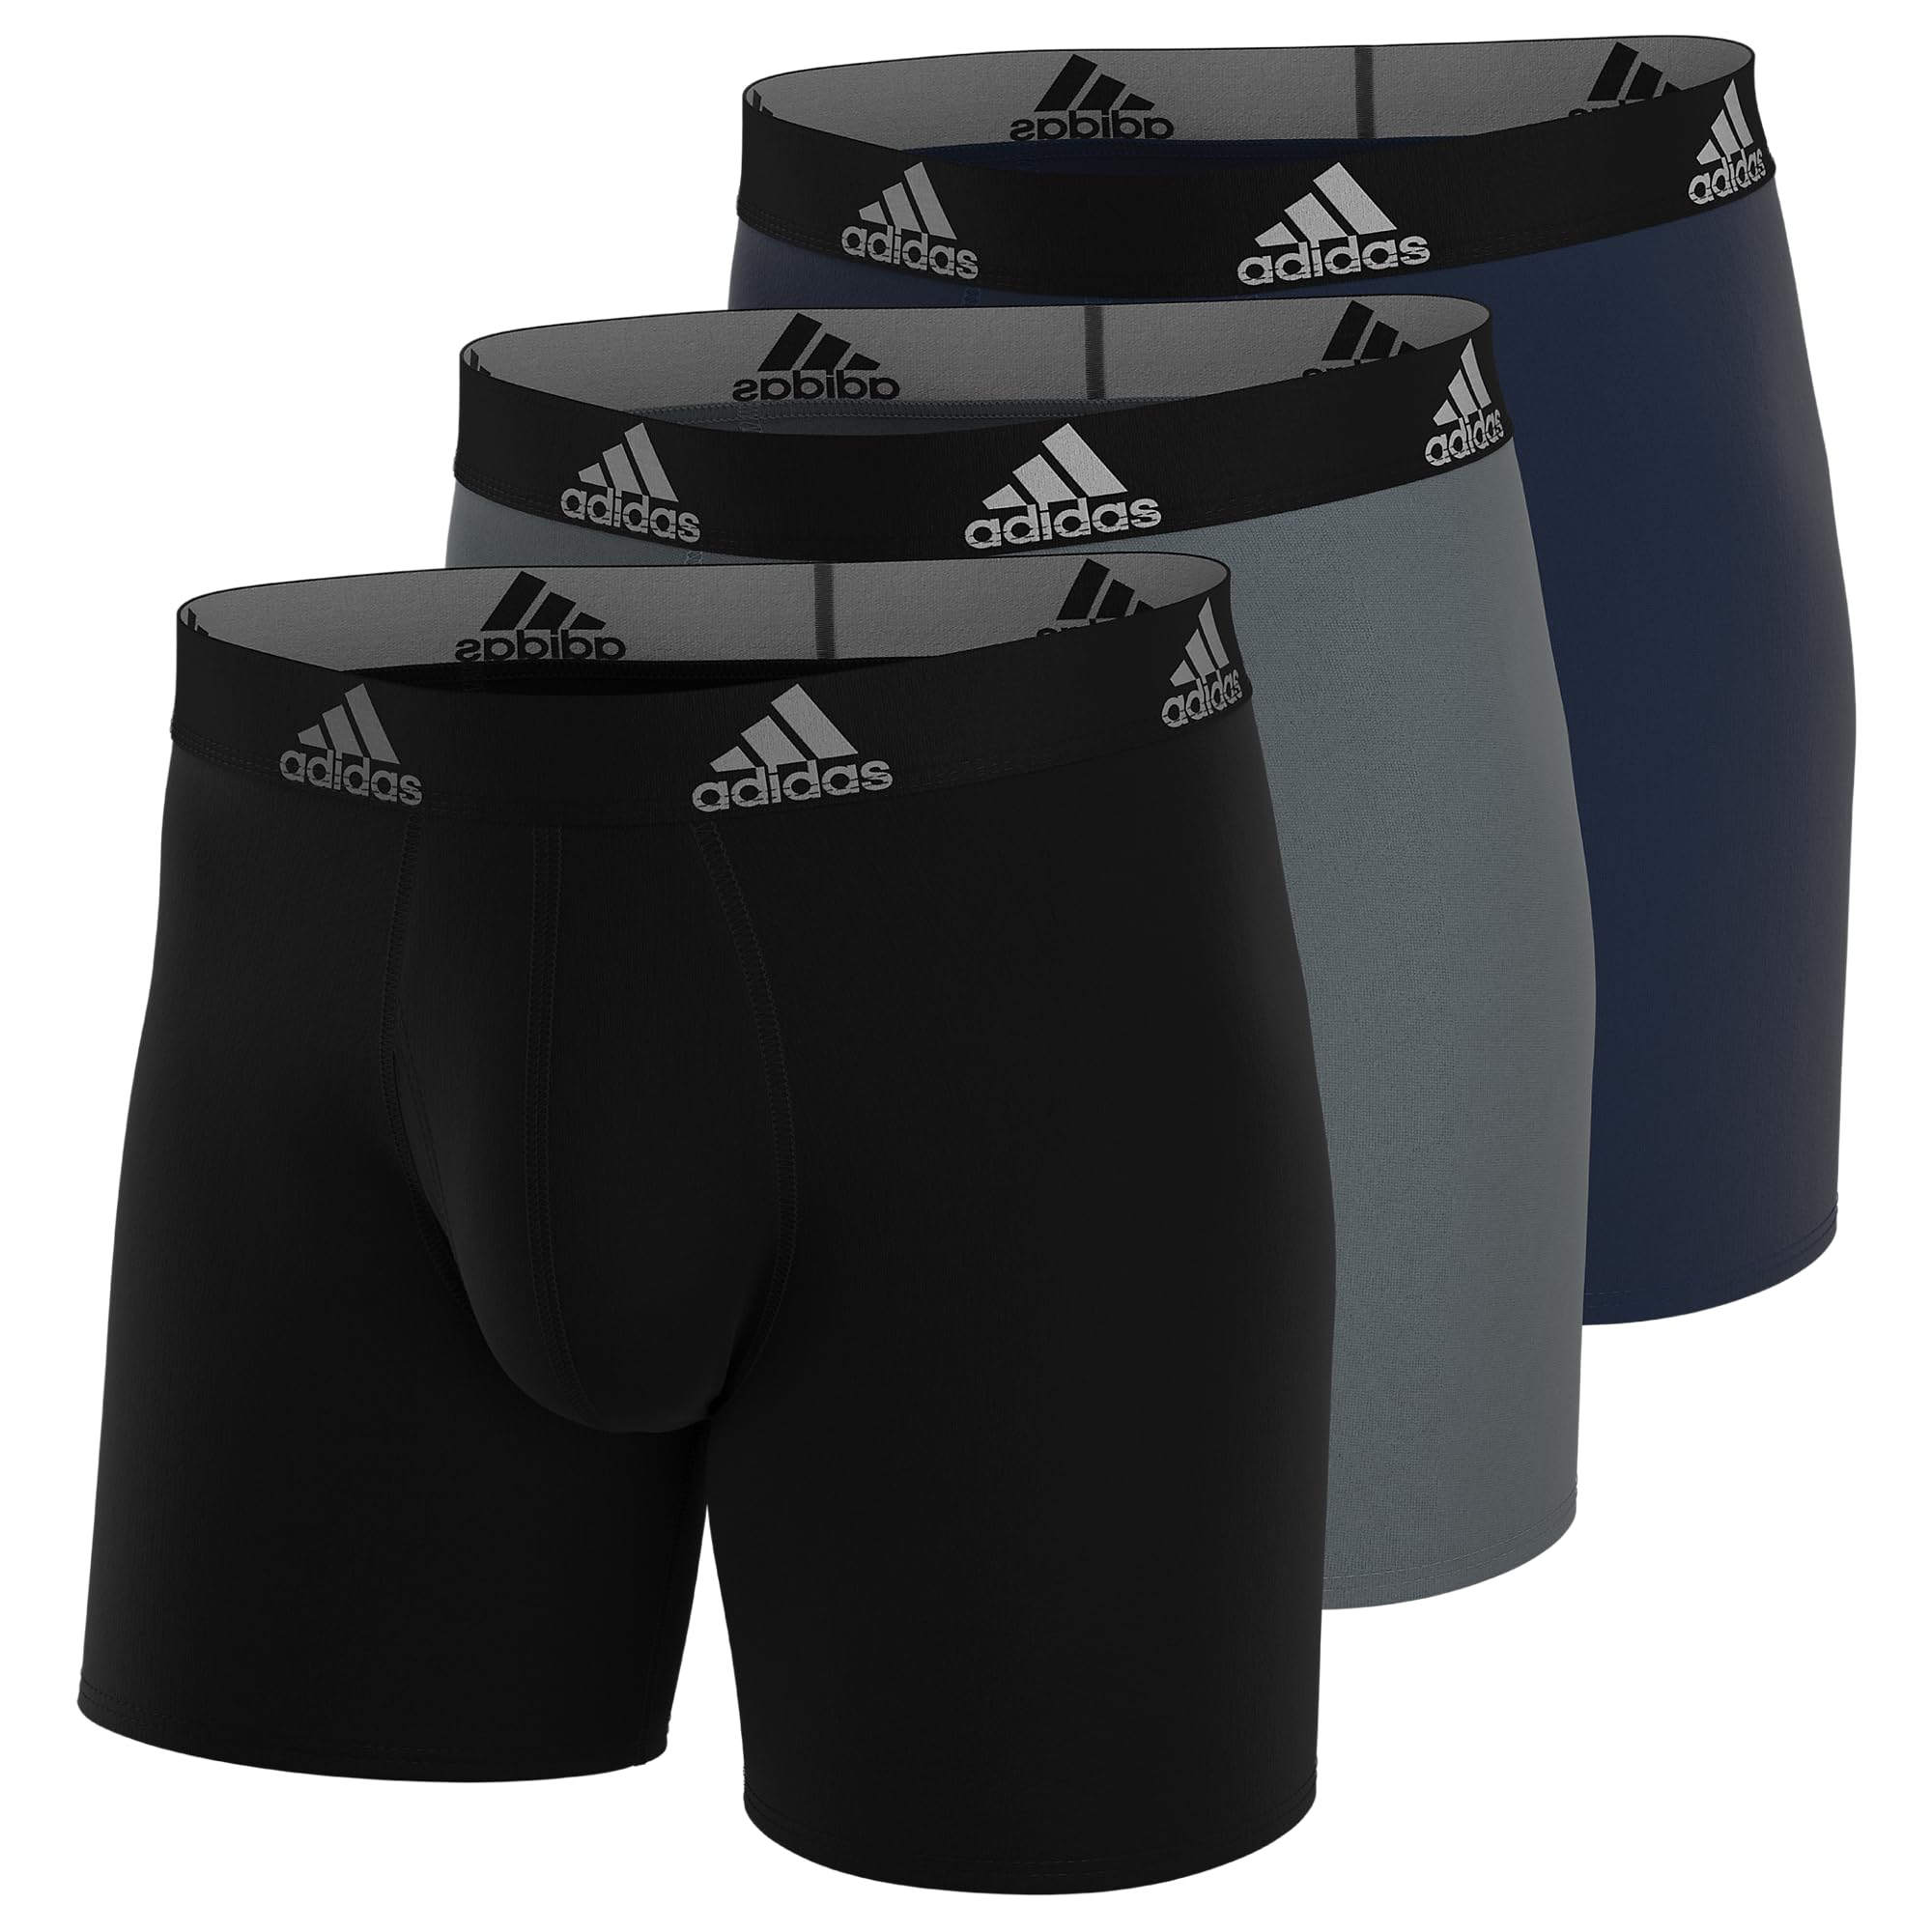 Adidas Men's Performance Boxer Brief Underwear (3-Pack) Boxed, Black/Grey/Collegiate Navy, X-Large